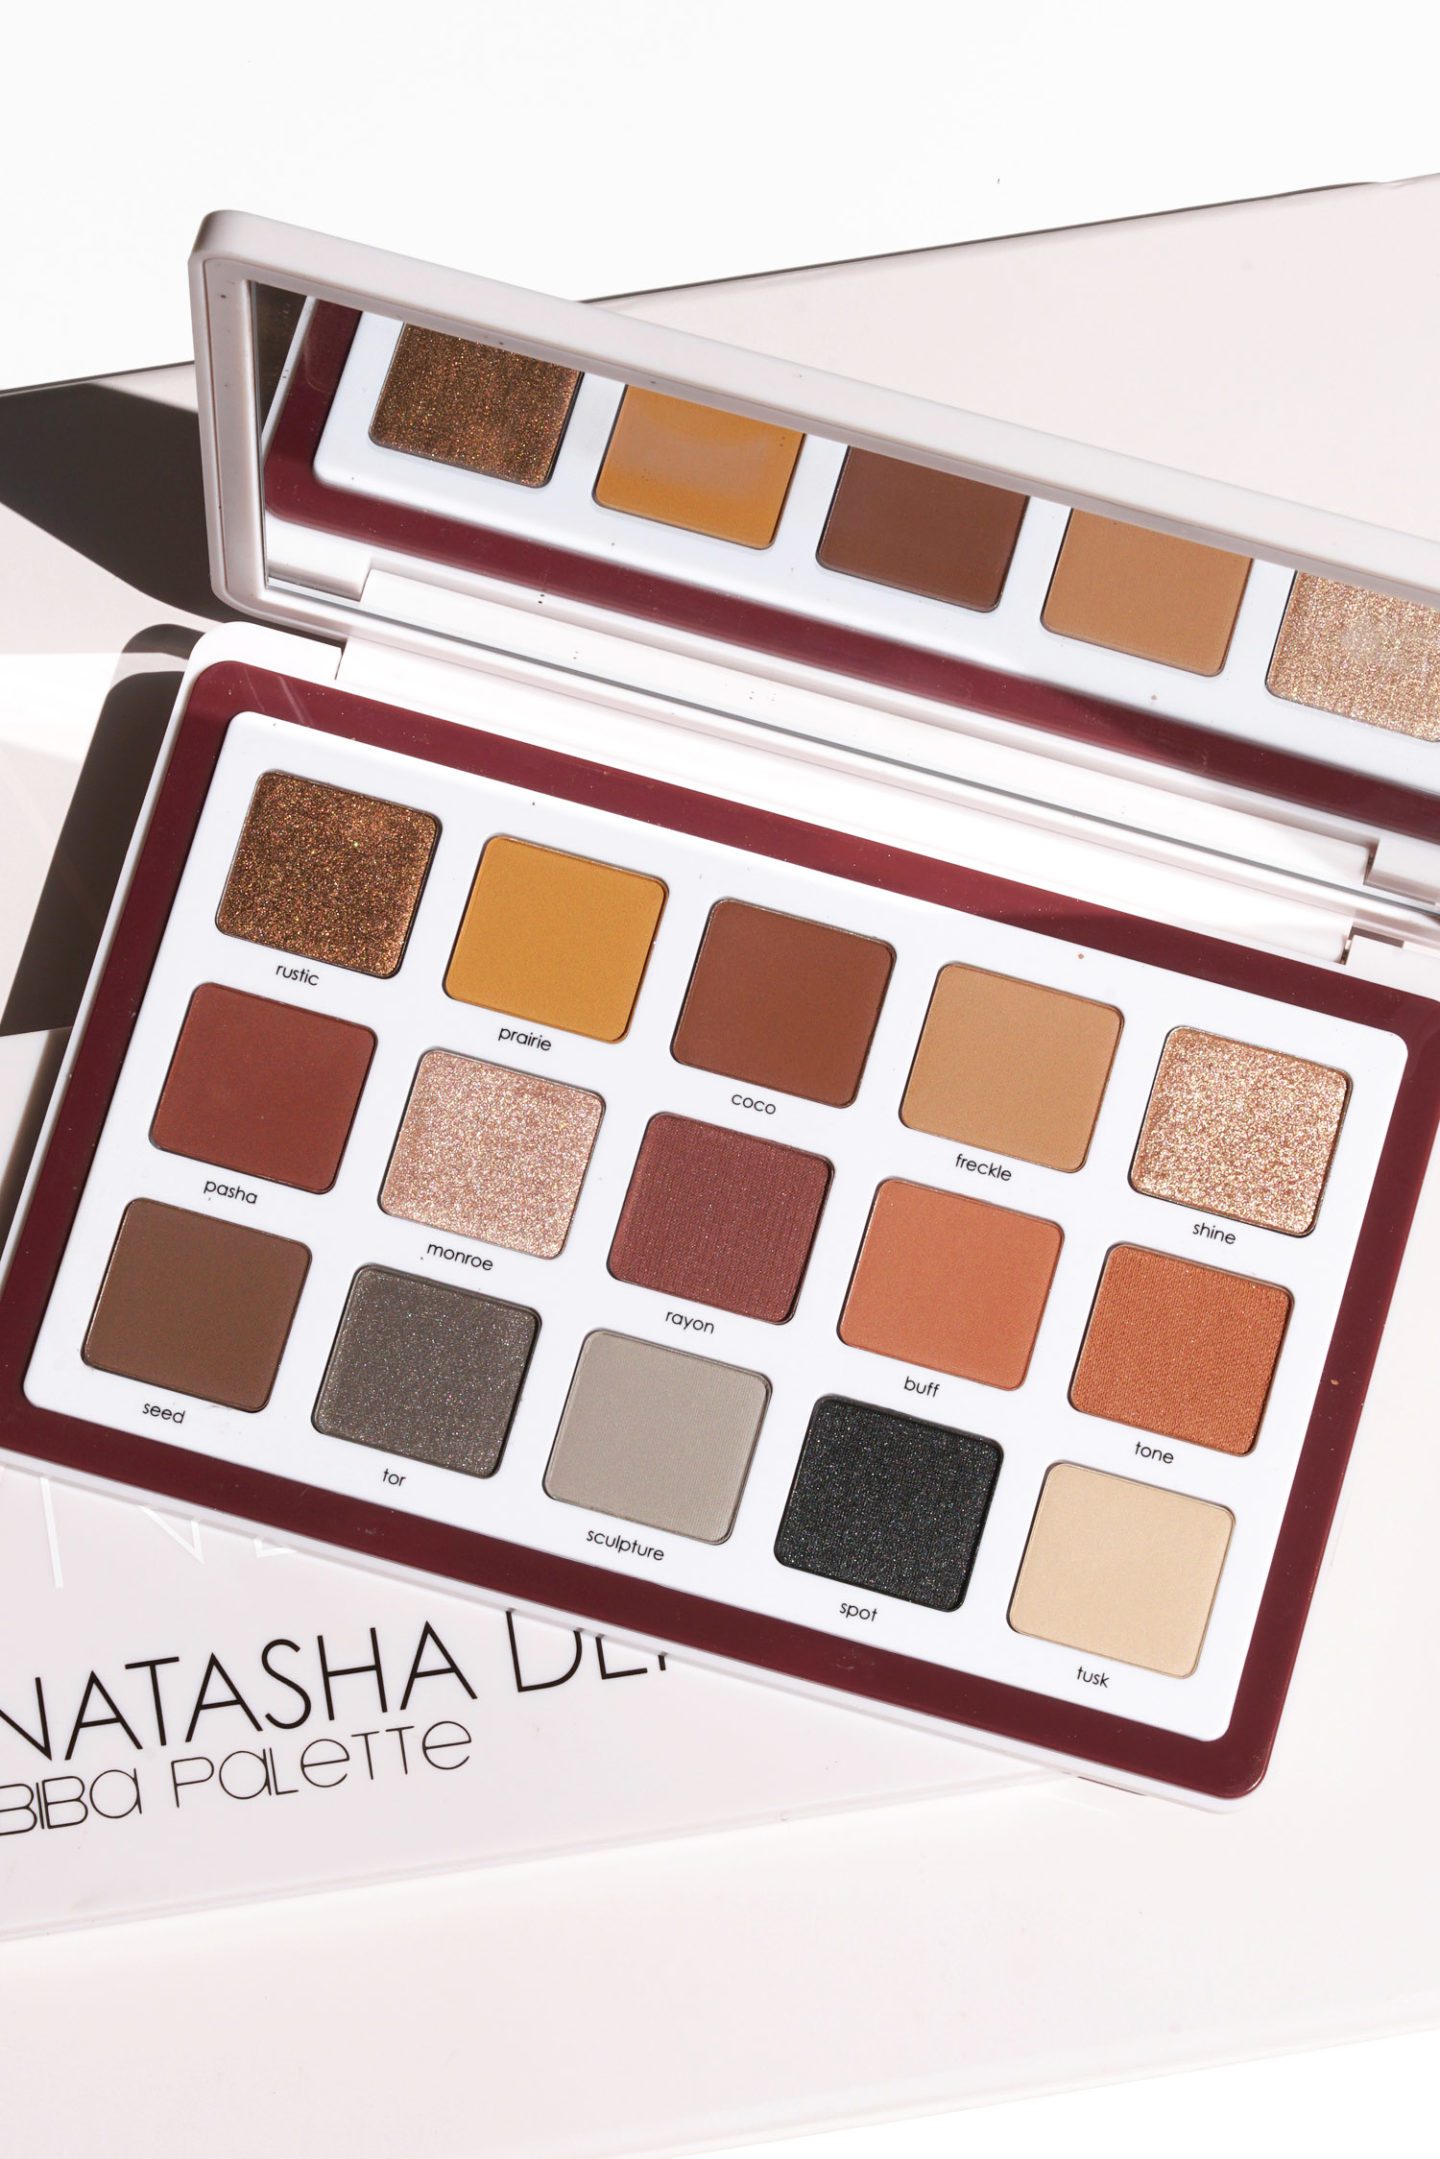 Natasha Denona Biba Eyeshadow Palette Review and Swatches via The Beauty Look Book